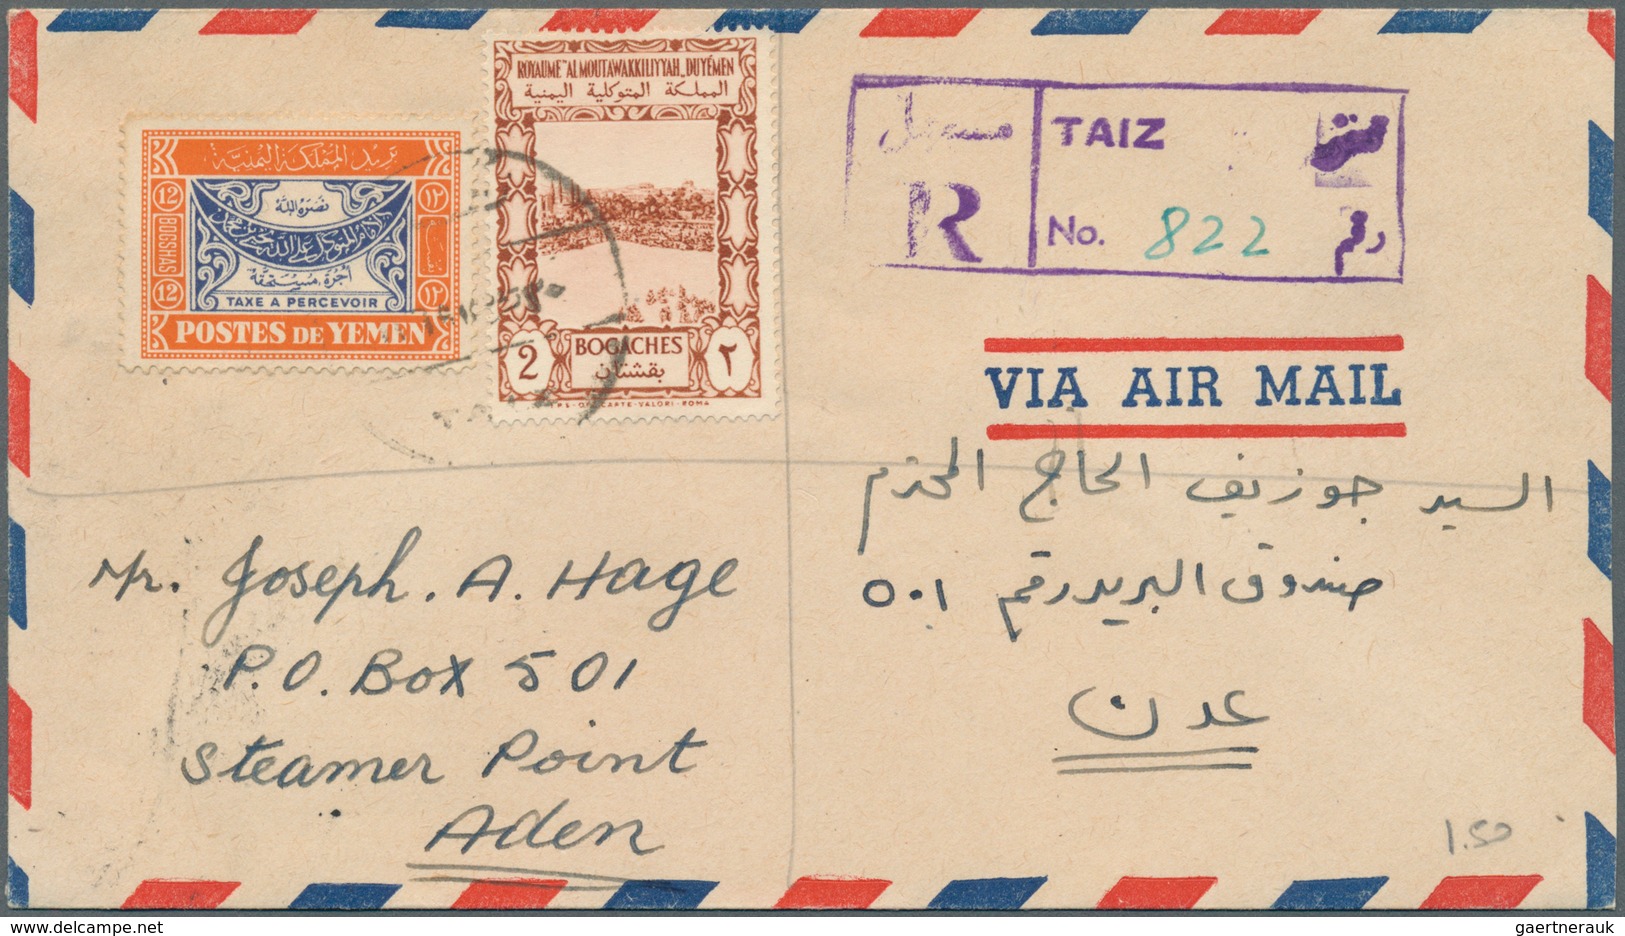 23031 Jemen: 1953/1958, lot of 21 covers mainly to destinations abroad (Lebanon, USA, Jordan) incl. regist